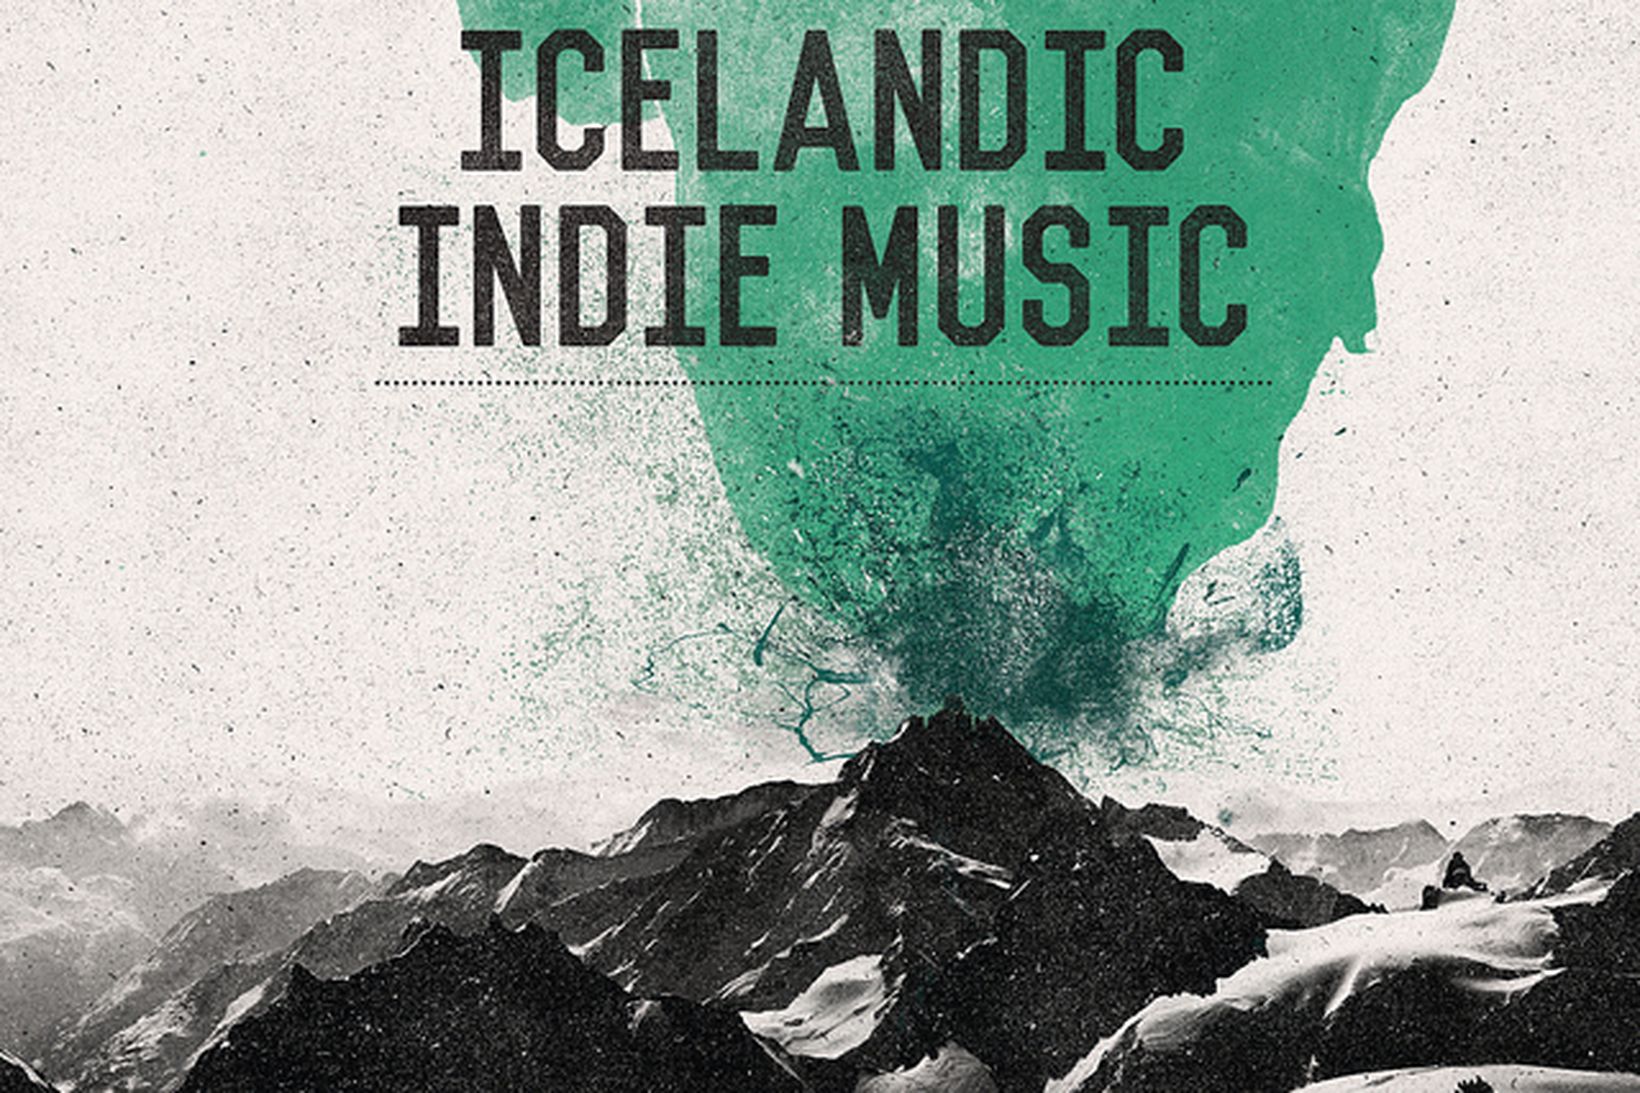 This Is Icelandic Indie Music